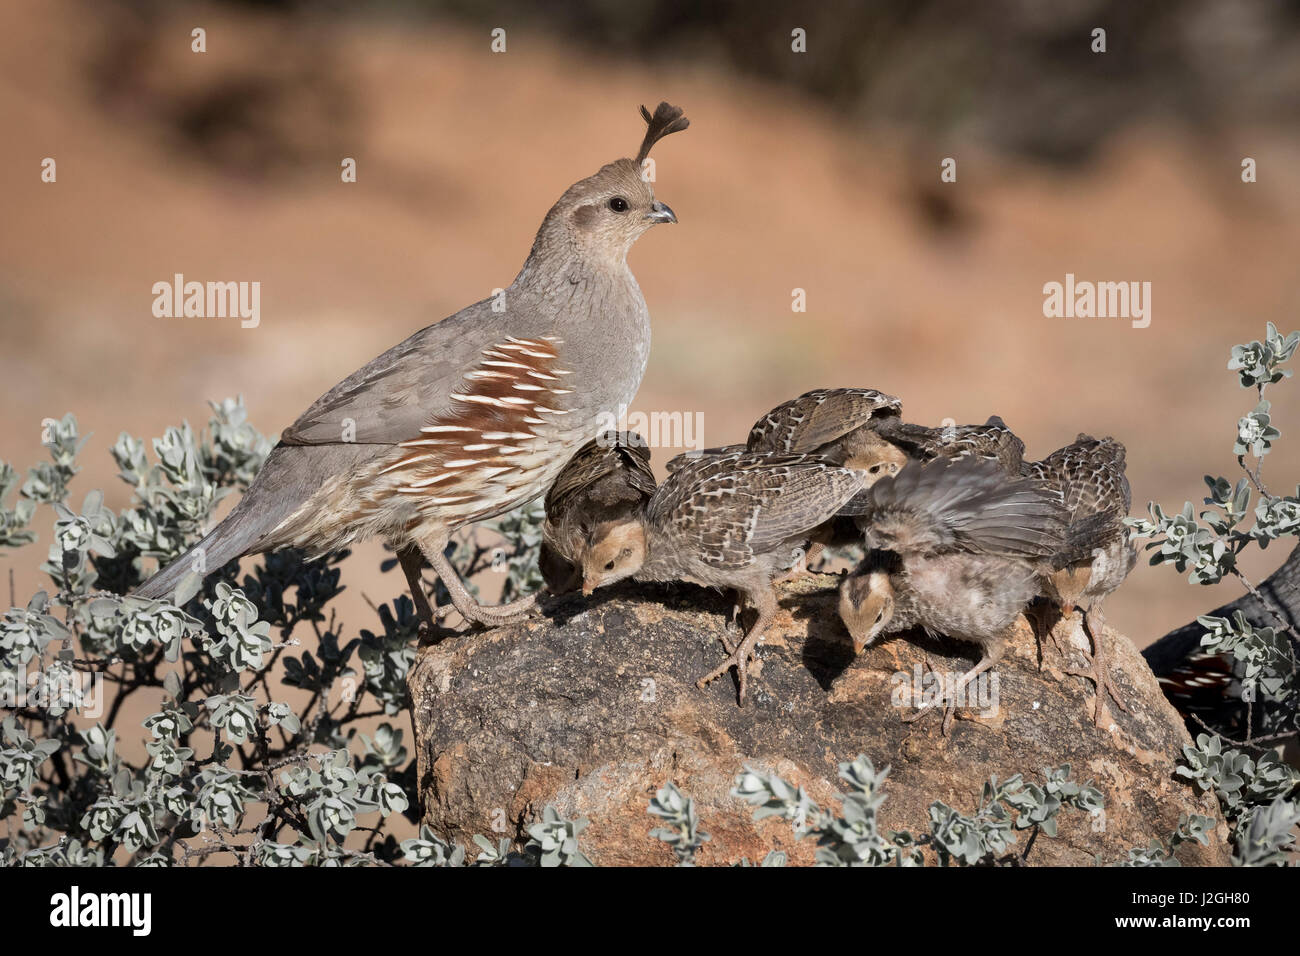 USA, Arizona, Amado. Female Gambel's quail with chicks. Credit as: Wendy Kaveney / Jaynes Gallery / DanitaDelimont.com Stock Photo